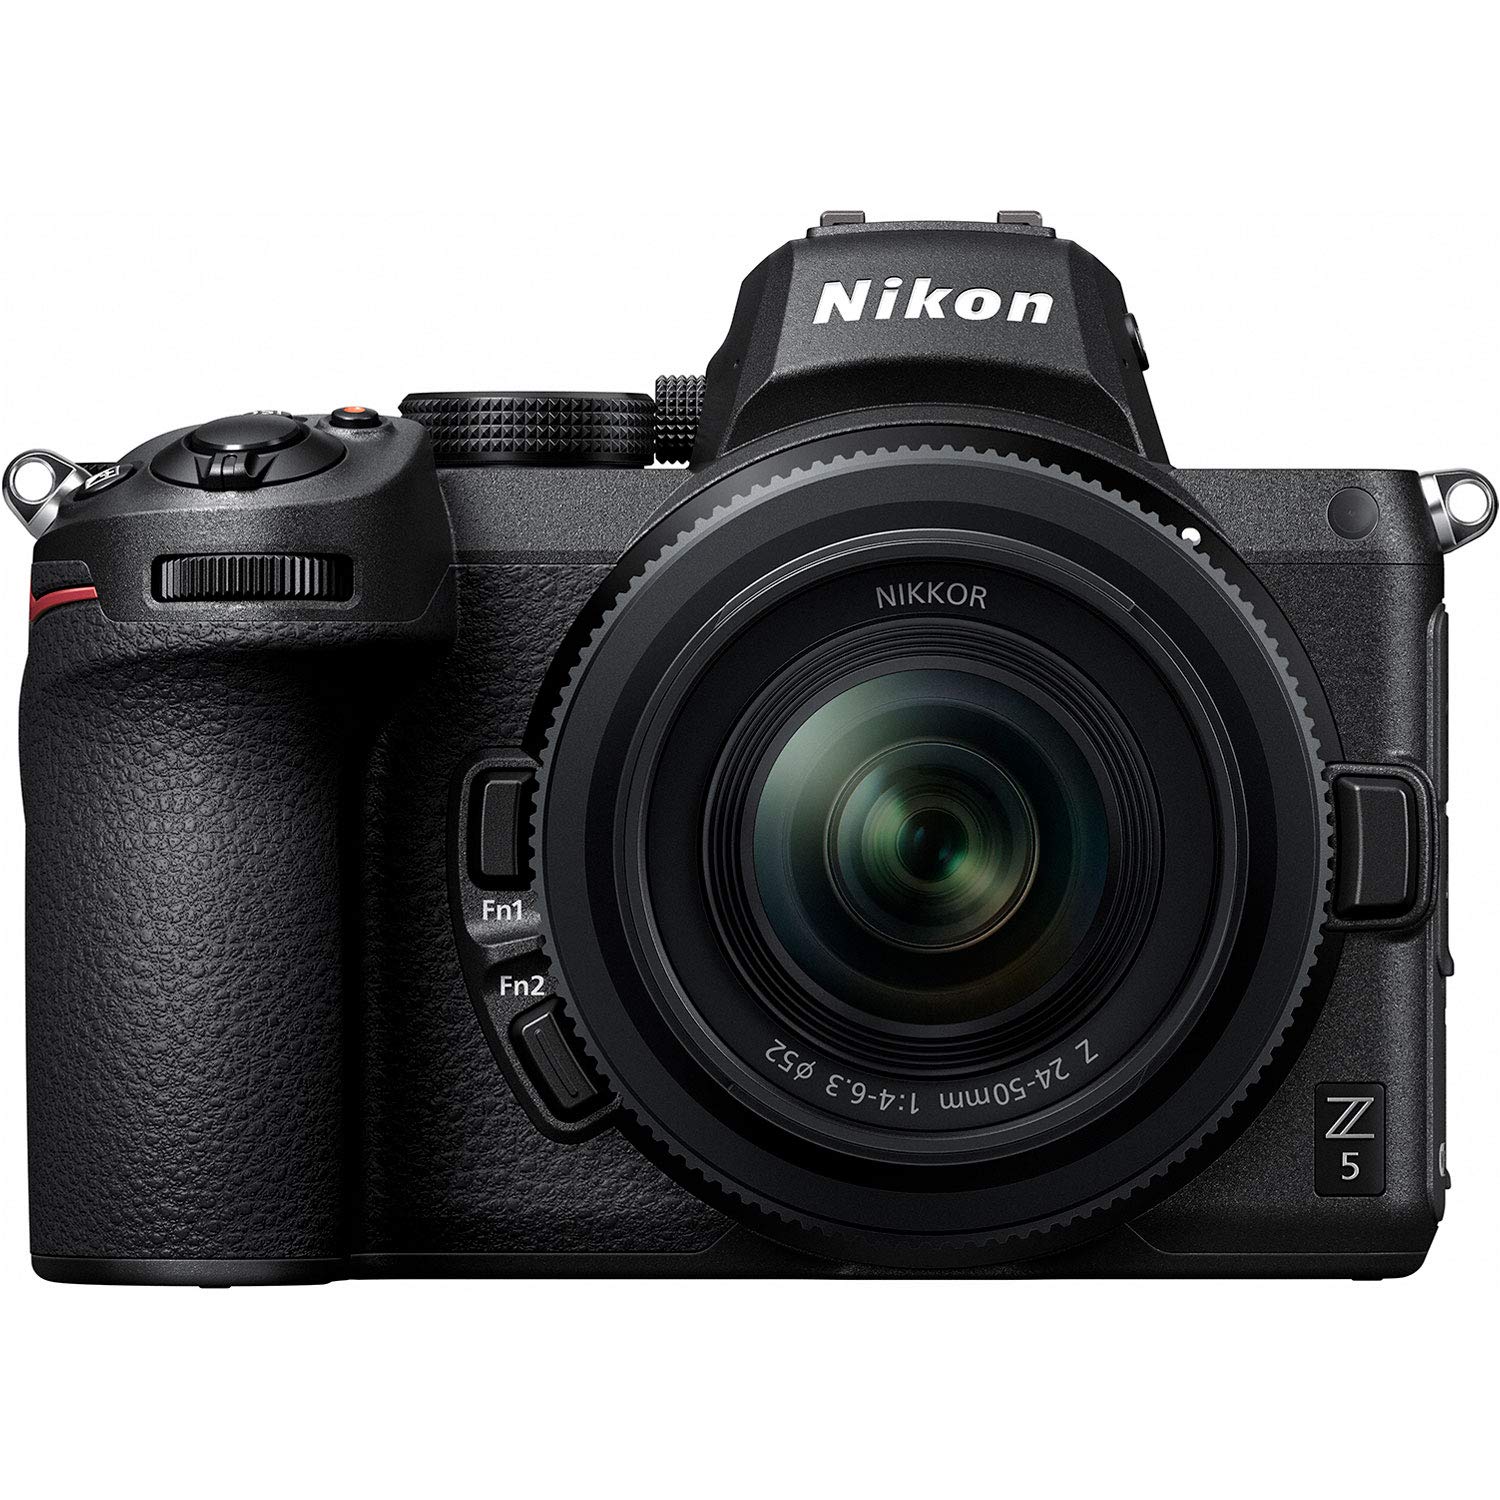 Nikon ミラーレス一眼カメラ Z5 レンズキット NIKKOR Z 24-50mm f/4-6.3 付属 Z5LK24-50 ブラック